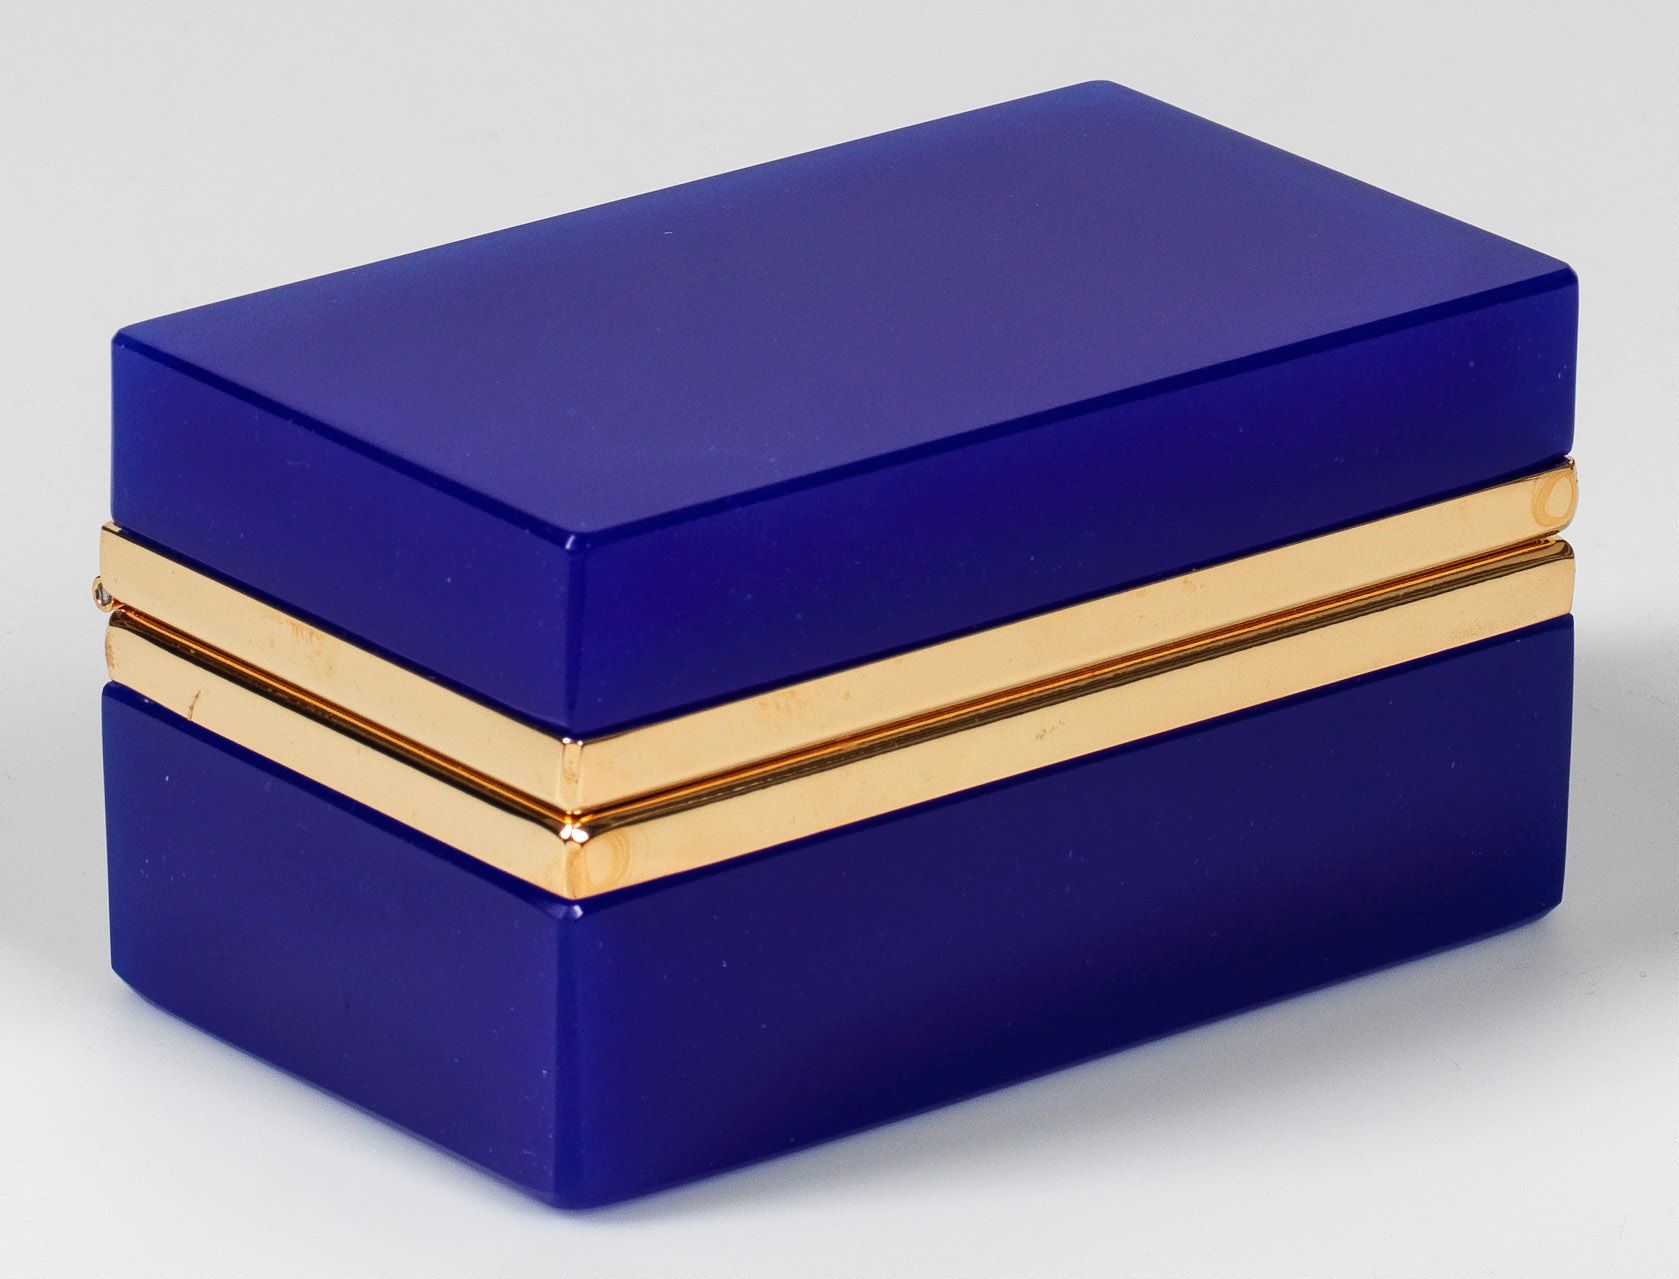 Null 装饰艺术盒 长方体形状。切割和抛光的深蓝色不透明玻璃。黄铜铰链座。高 6 厘米，10.8 厘米 x 6.5 厘米。
一个法国装饰艺术风格的深蓝色切割抛&hellip;